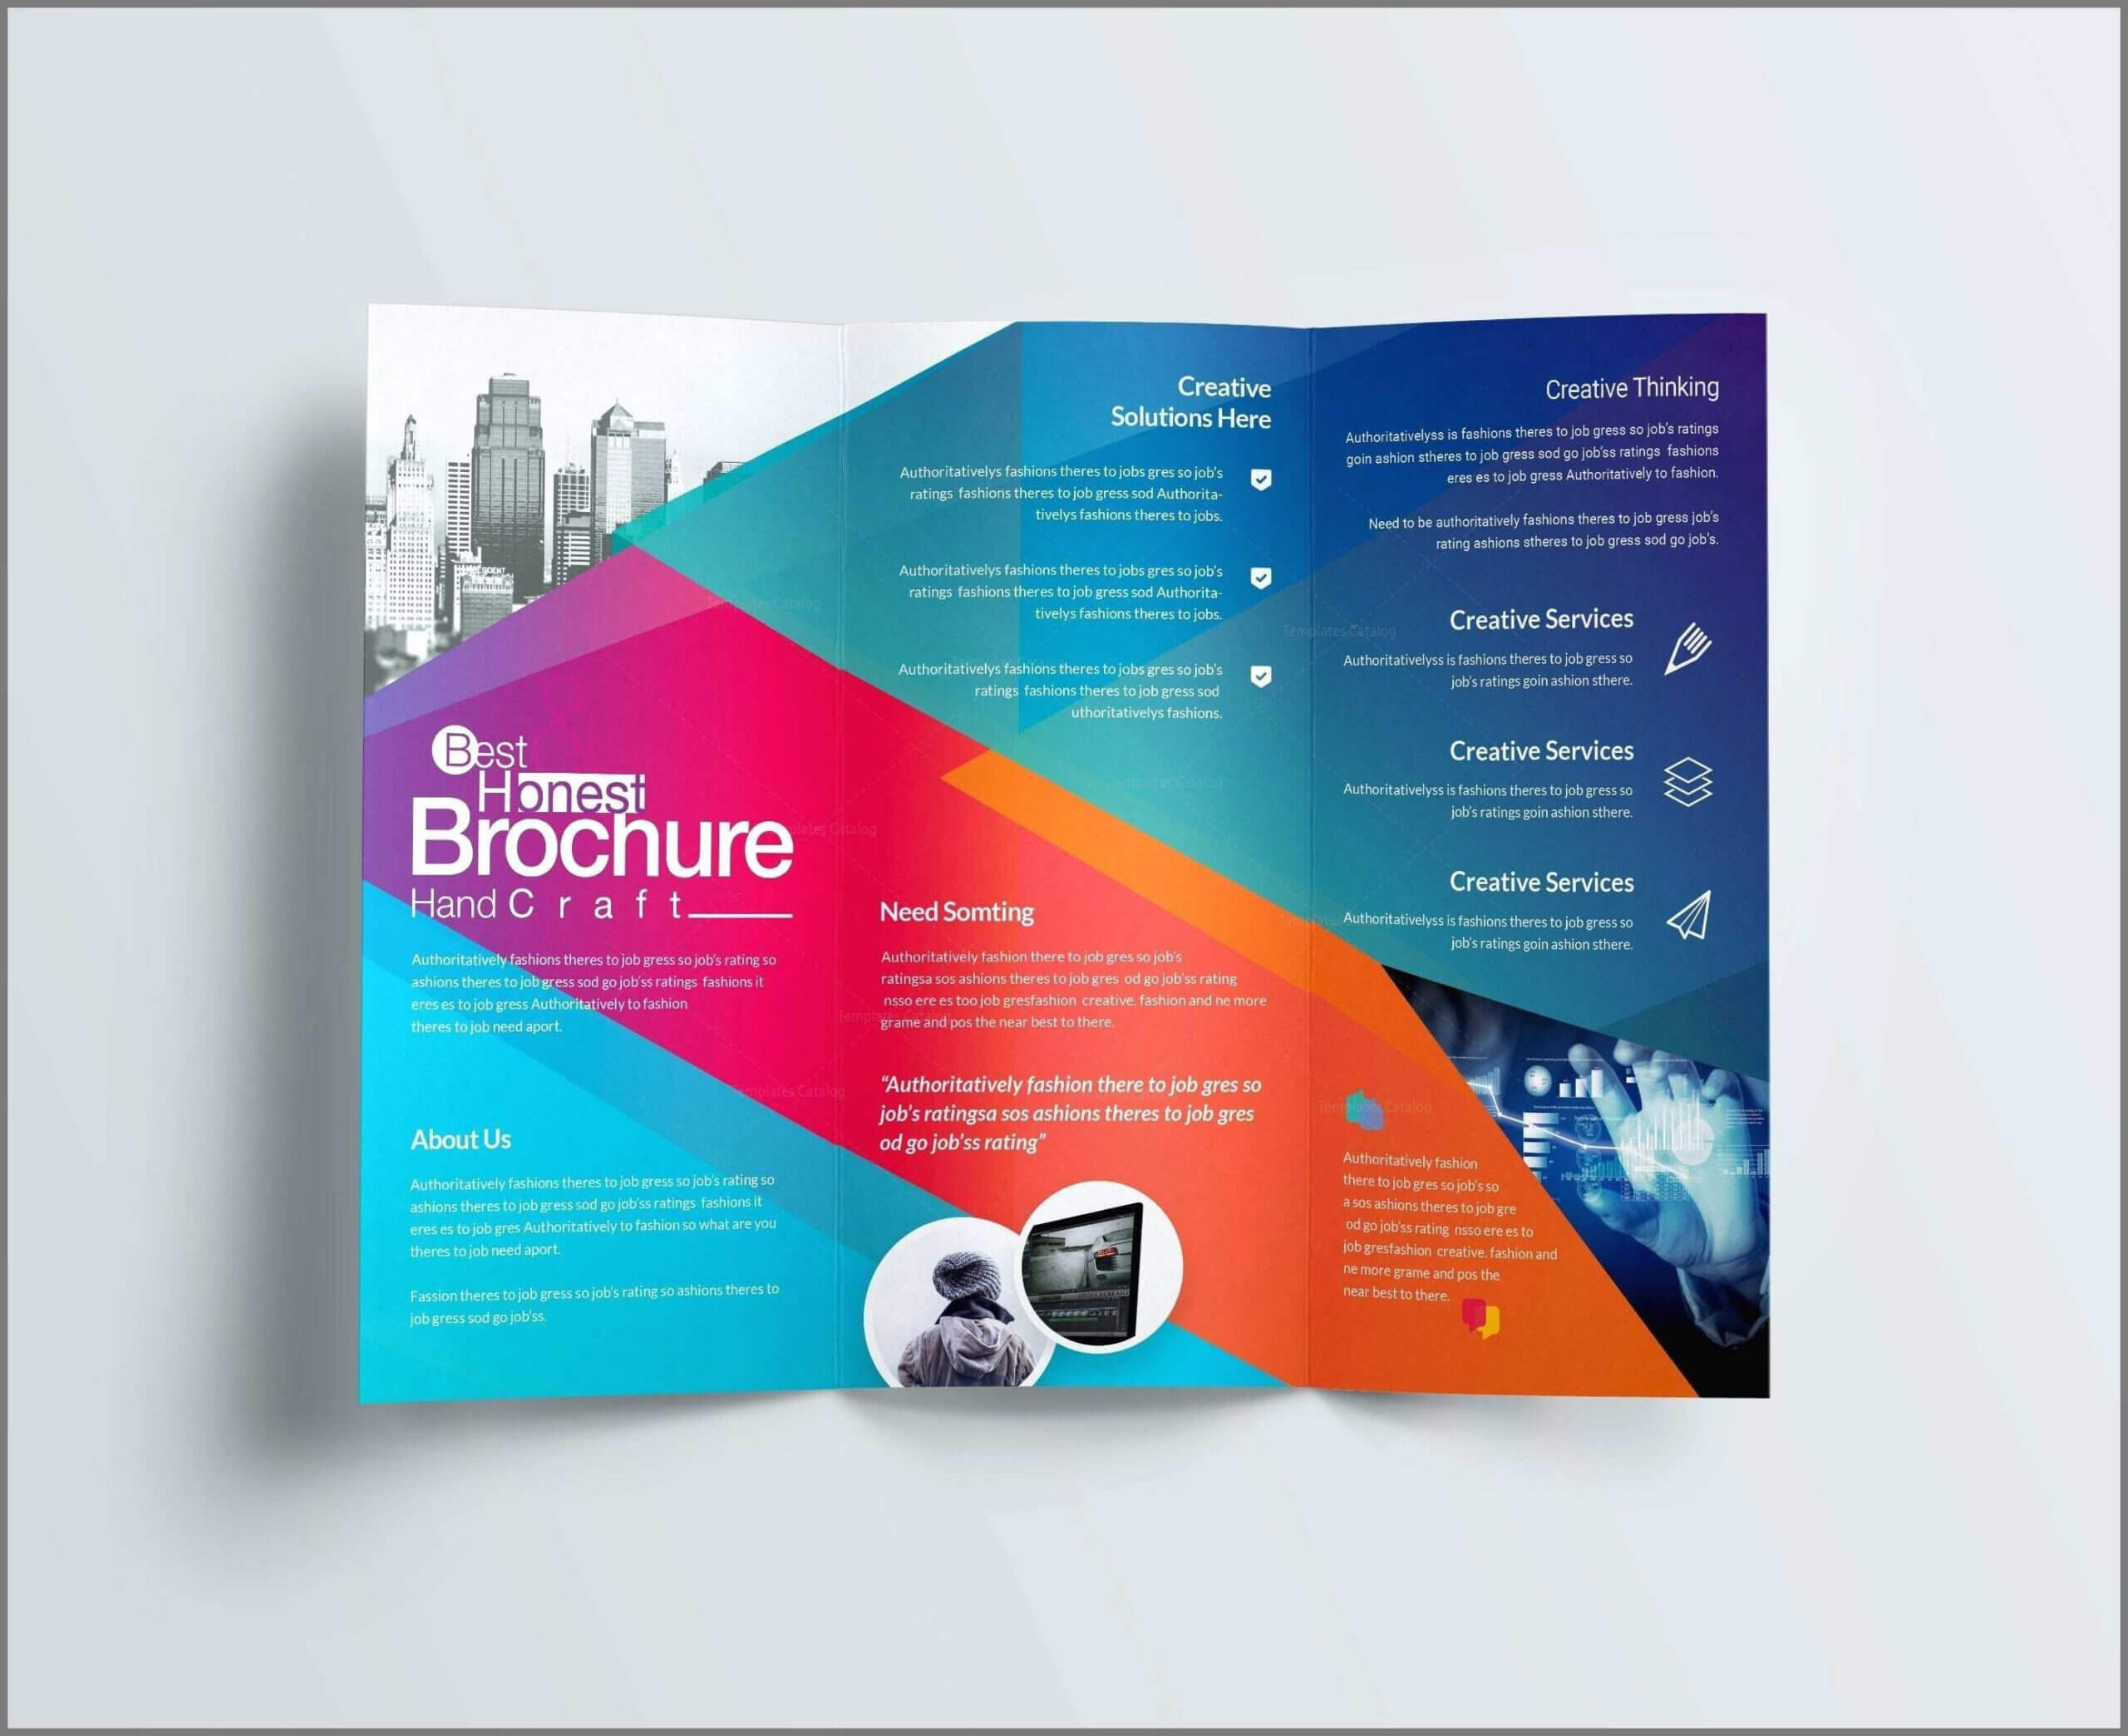 Free Church Brochure Templates For Microsoft Word With Free Church Brochure Templates For Microsoft Word